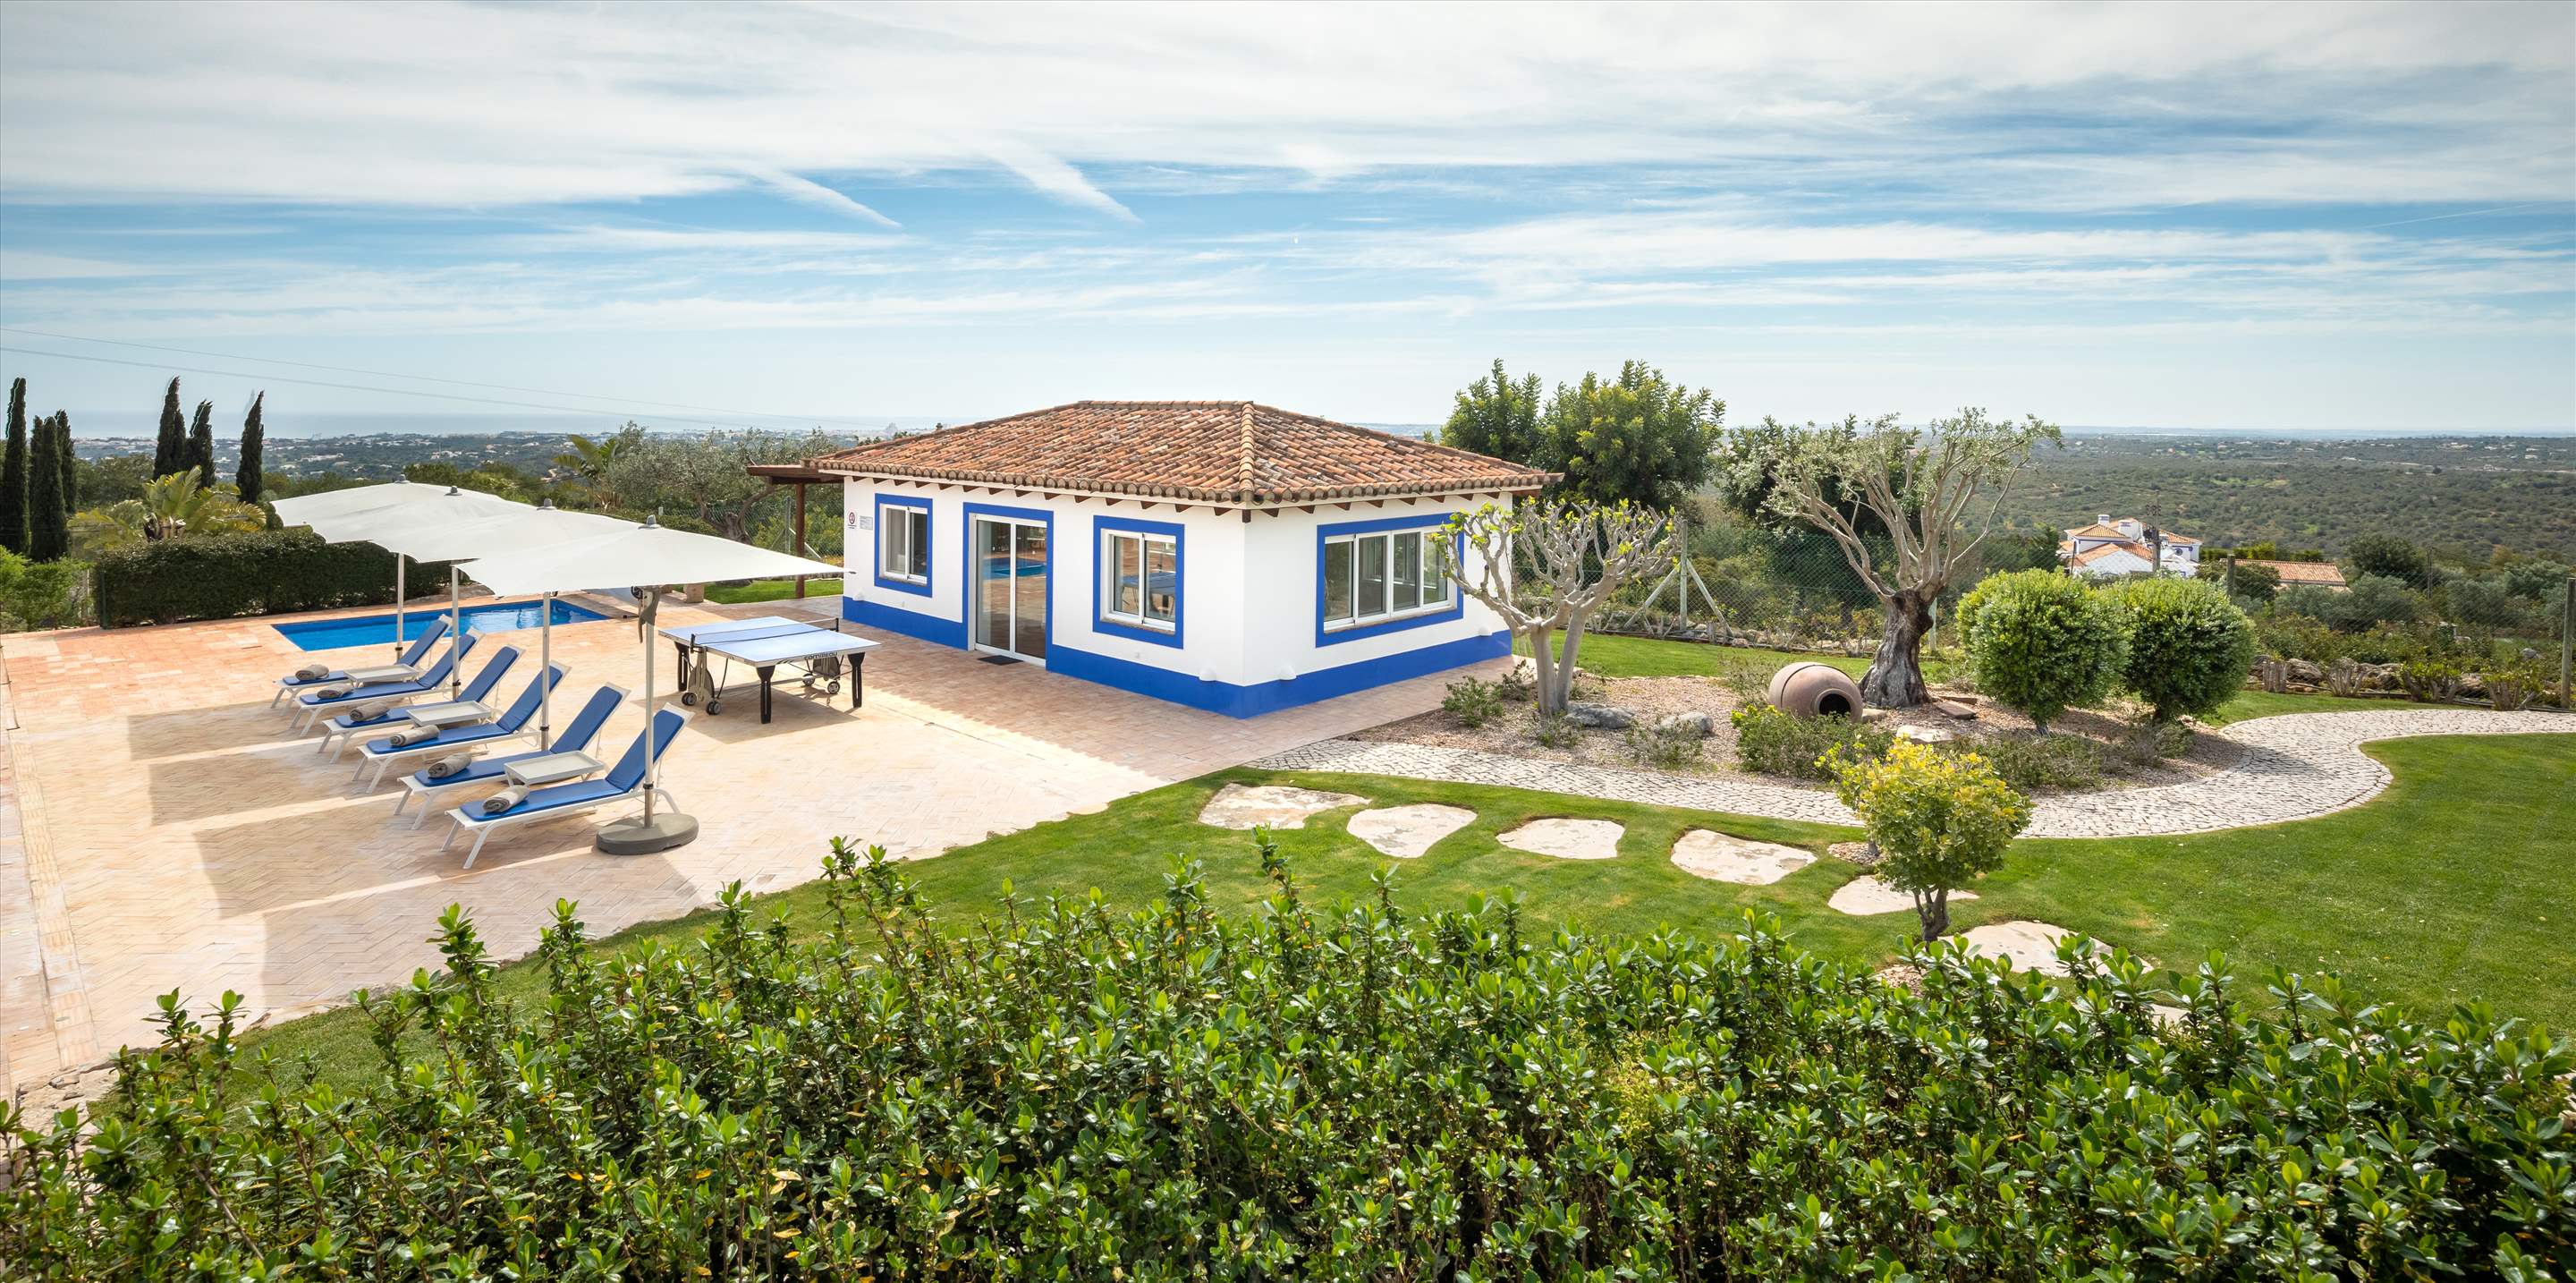 Casa da Montanha, 11-12 persons, 7 bedroom villa in Vilamoura Area, Algarve Photo #3